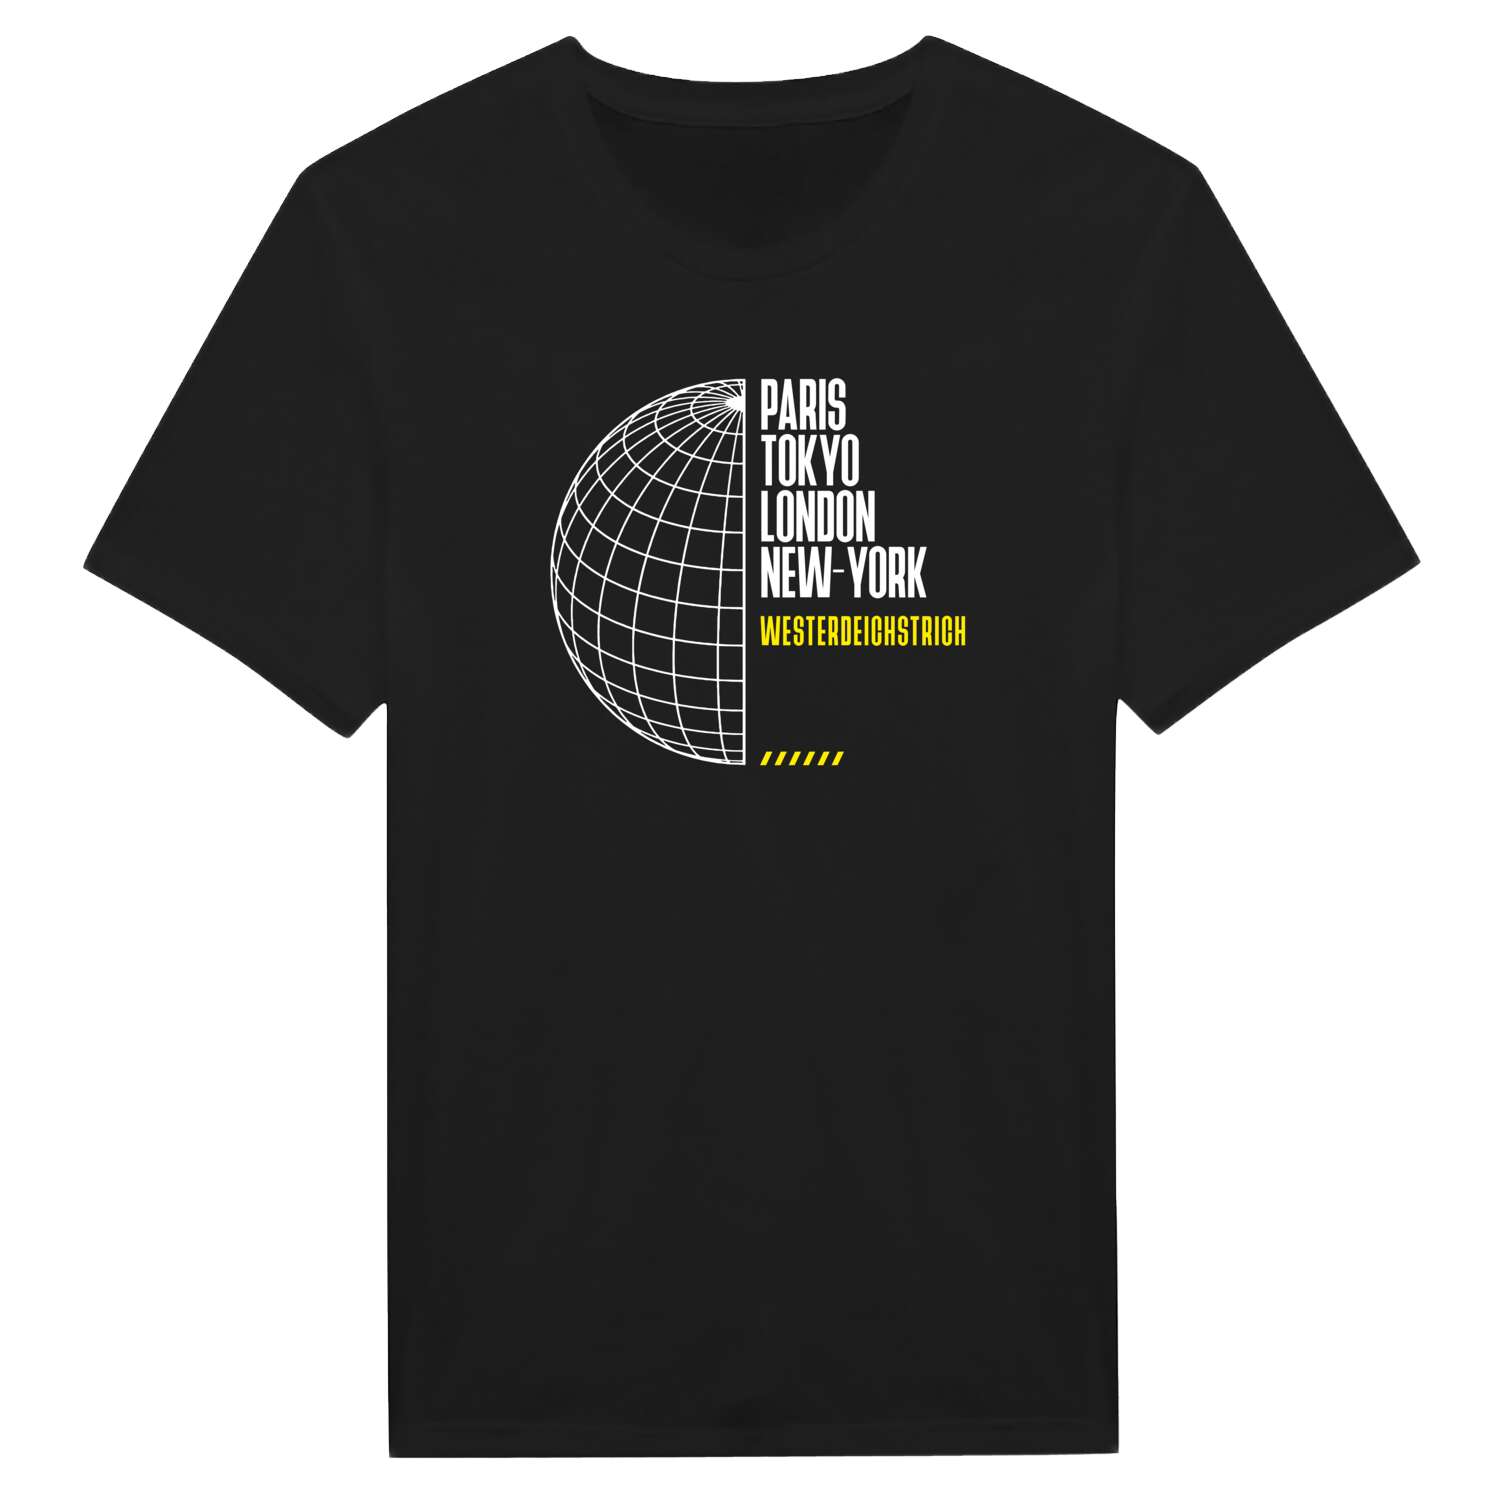 Westerdeichstrich T-Shirt »Paris Tokyo London«